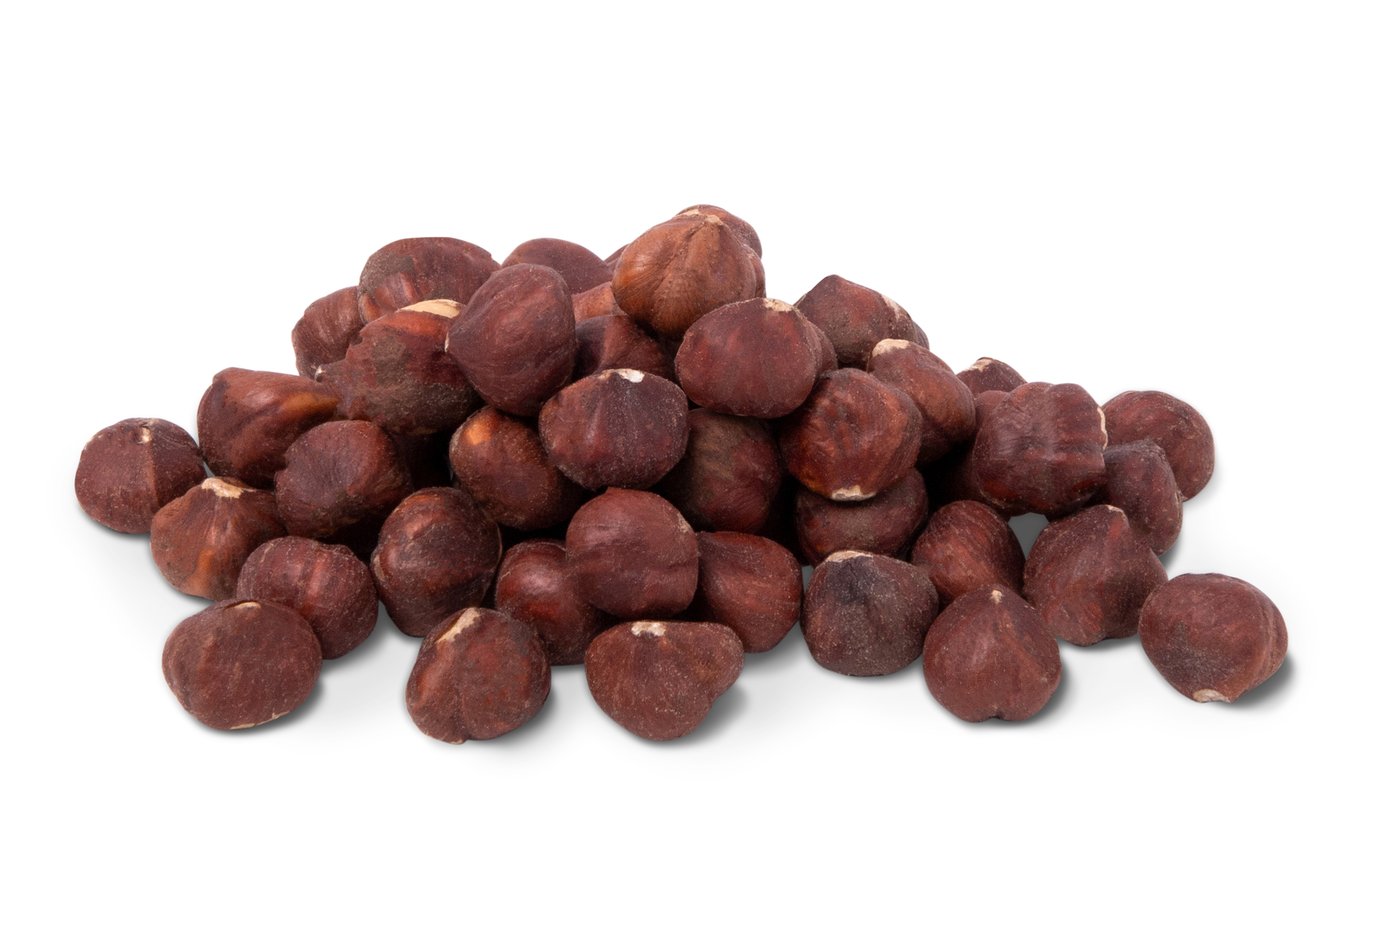 Organic Dry Roasted Hazelnuts (Salted) image zoom